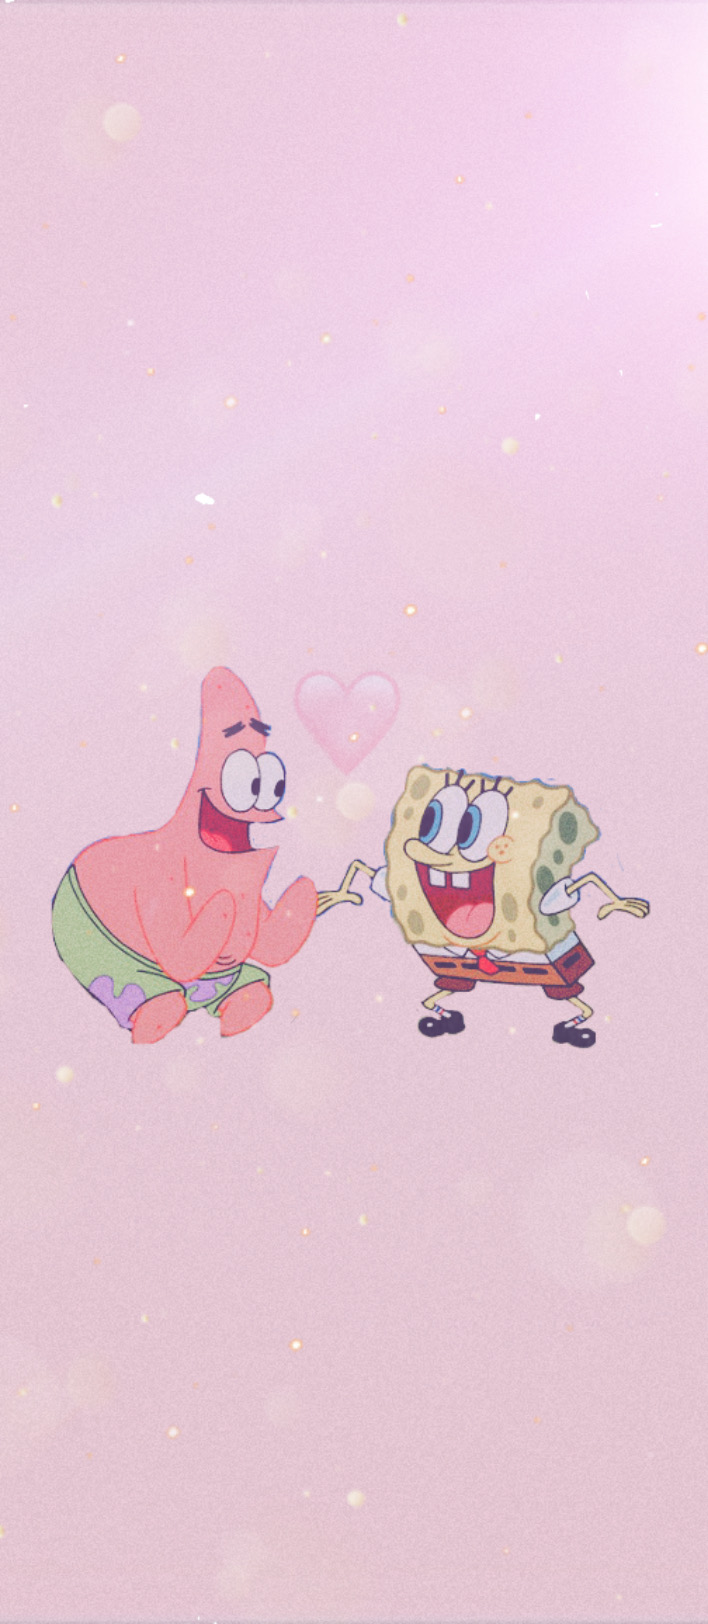 #spongebob #patrick #bestie #bestfriends #wallpaper #pink #freetoedit